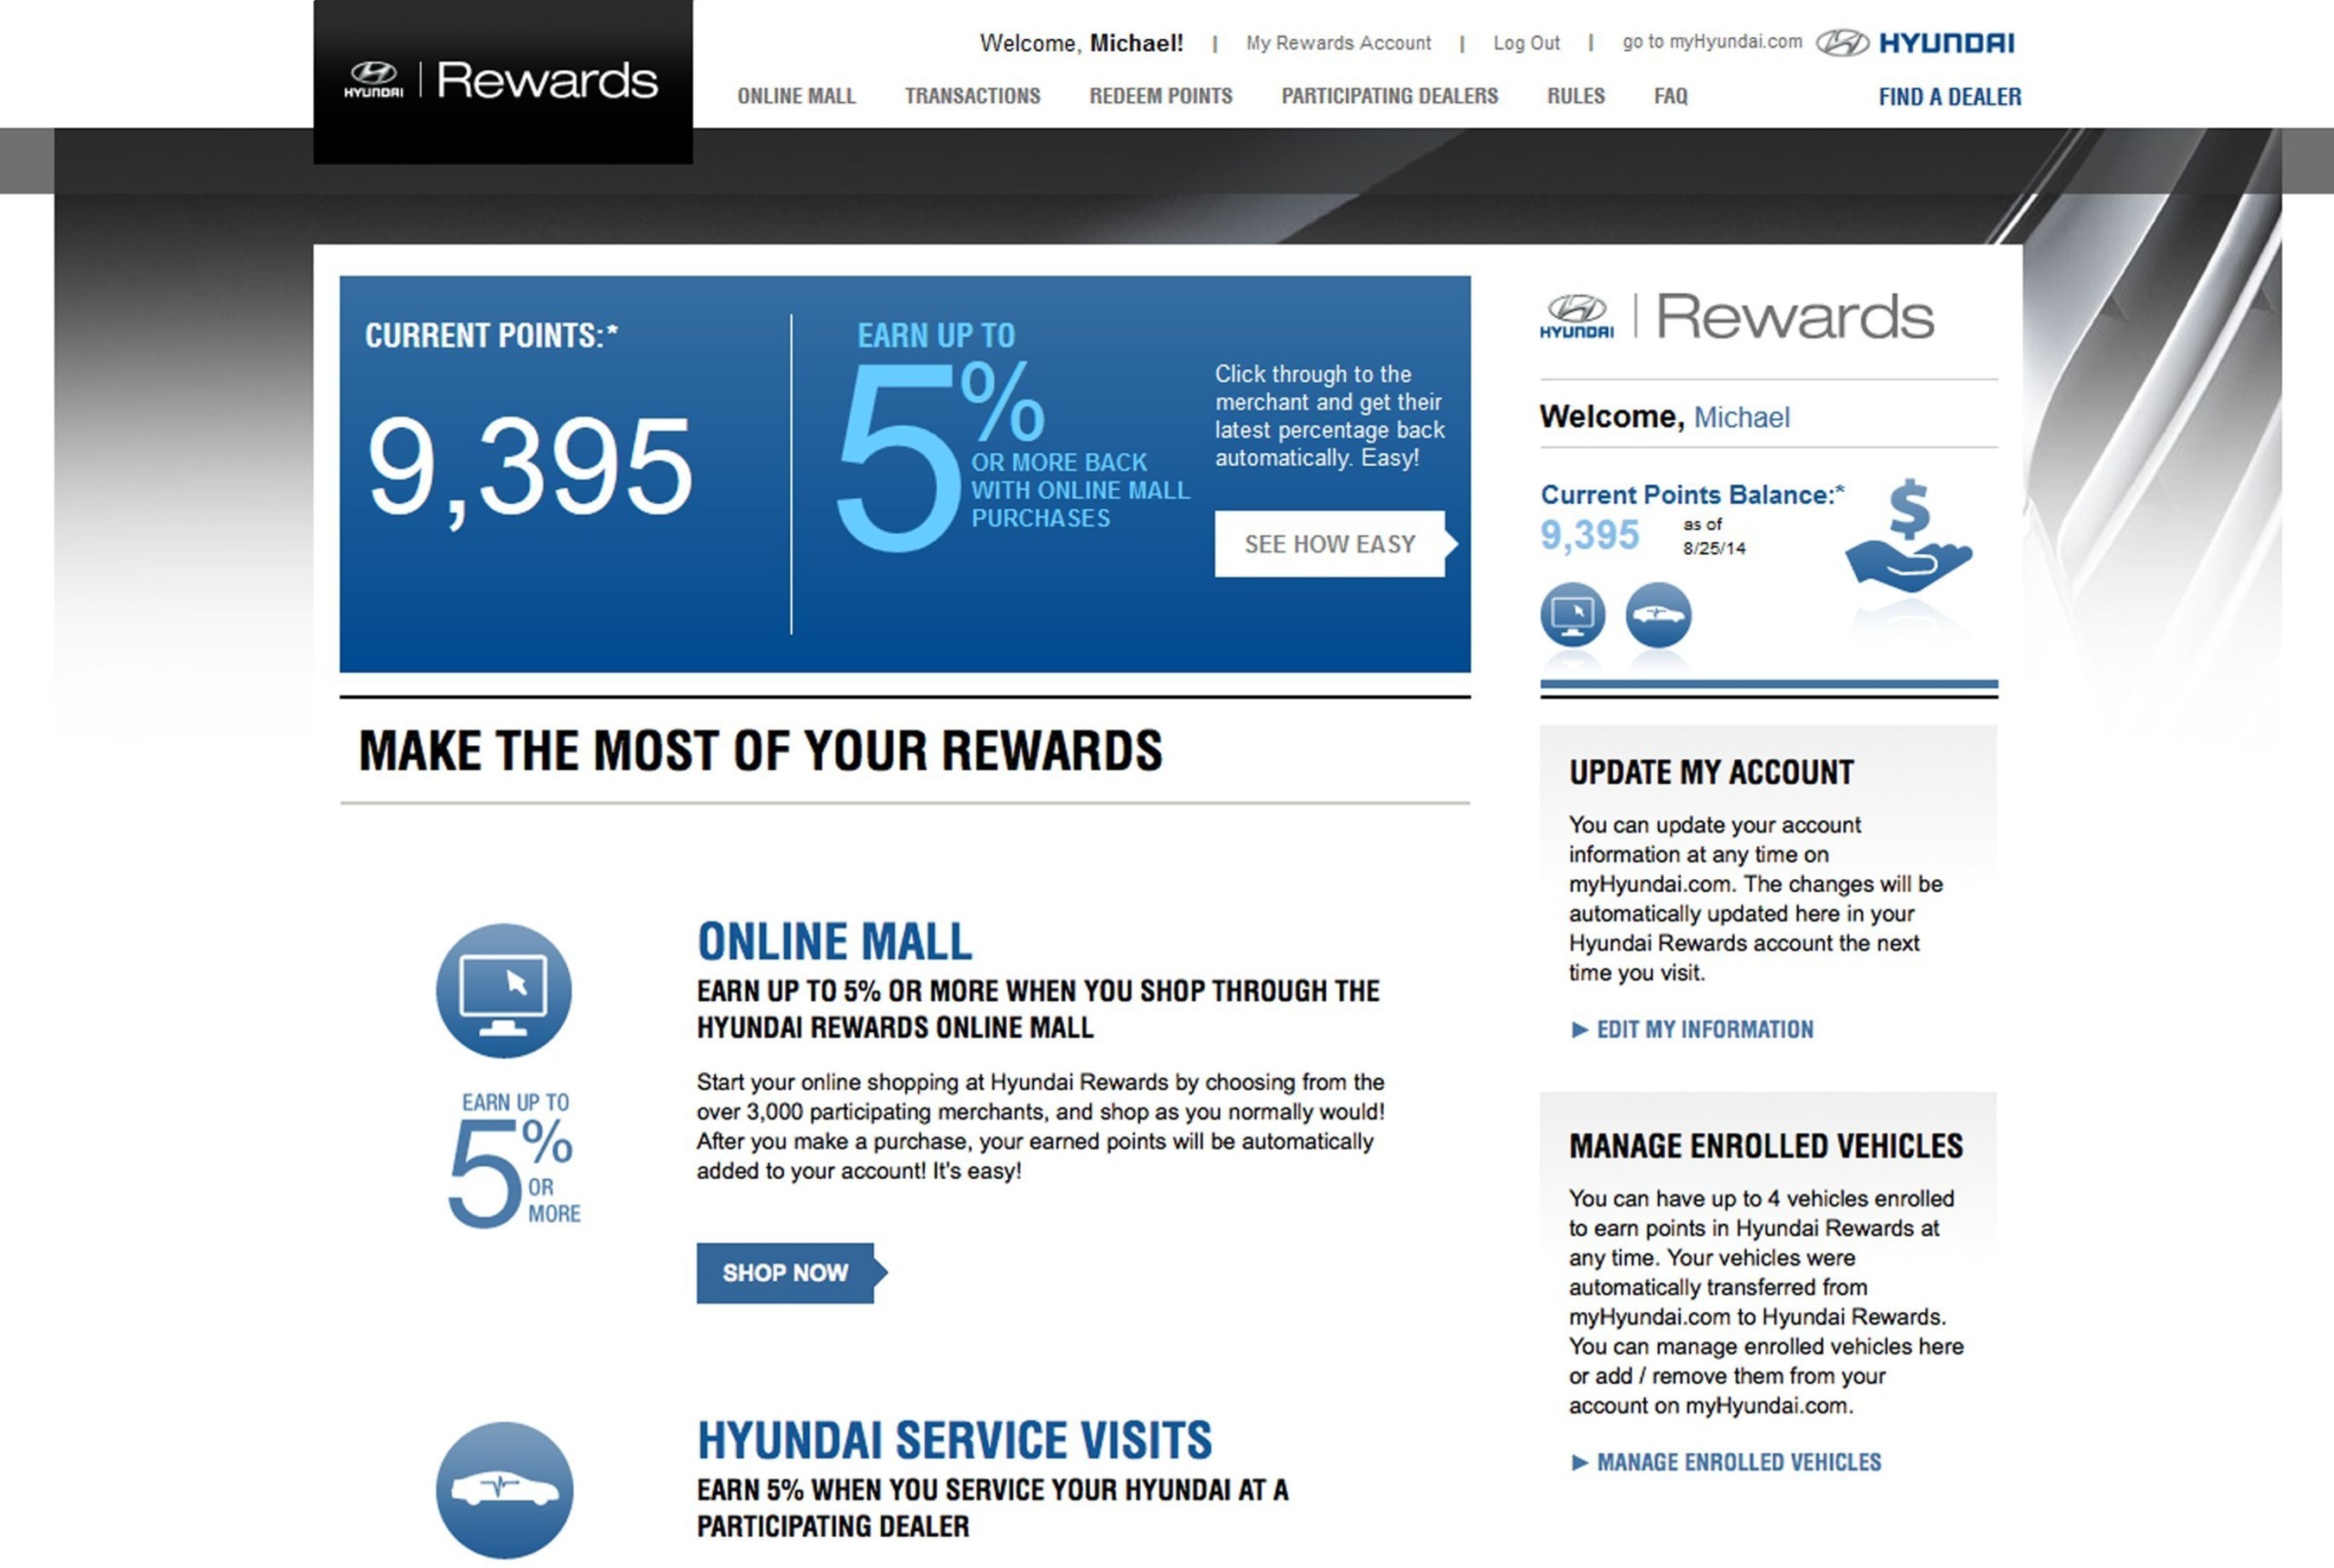 Hyundai Rewards Member Welcome Page. (PRNewsFoto/Hyundai Motor America) (PRNewsFoto/Hyundai Motor America)